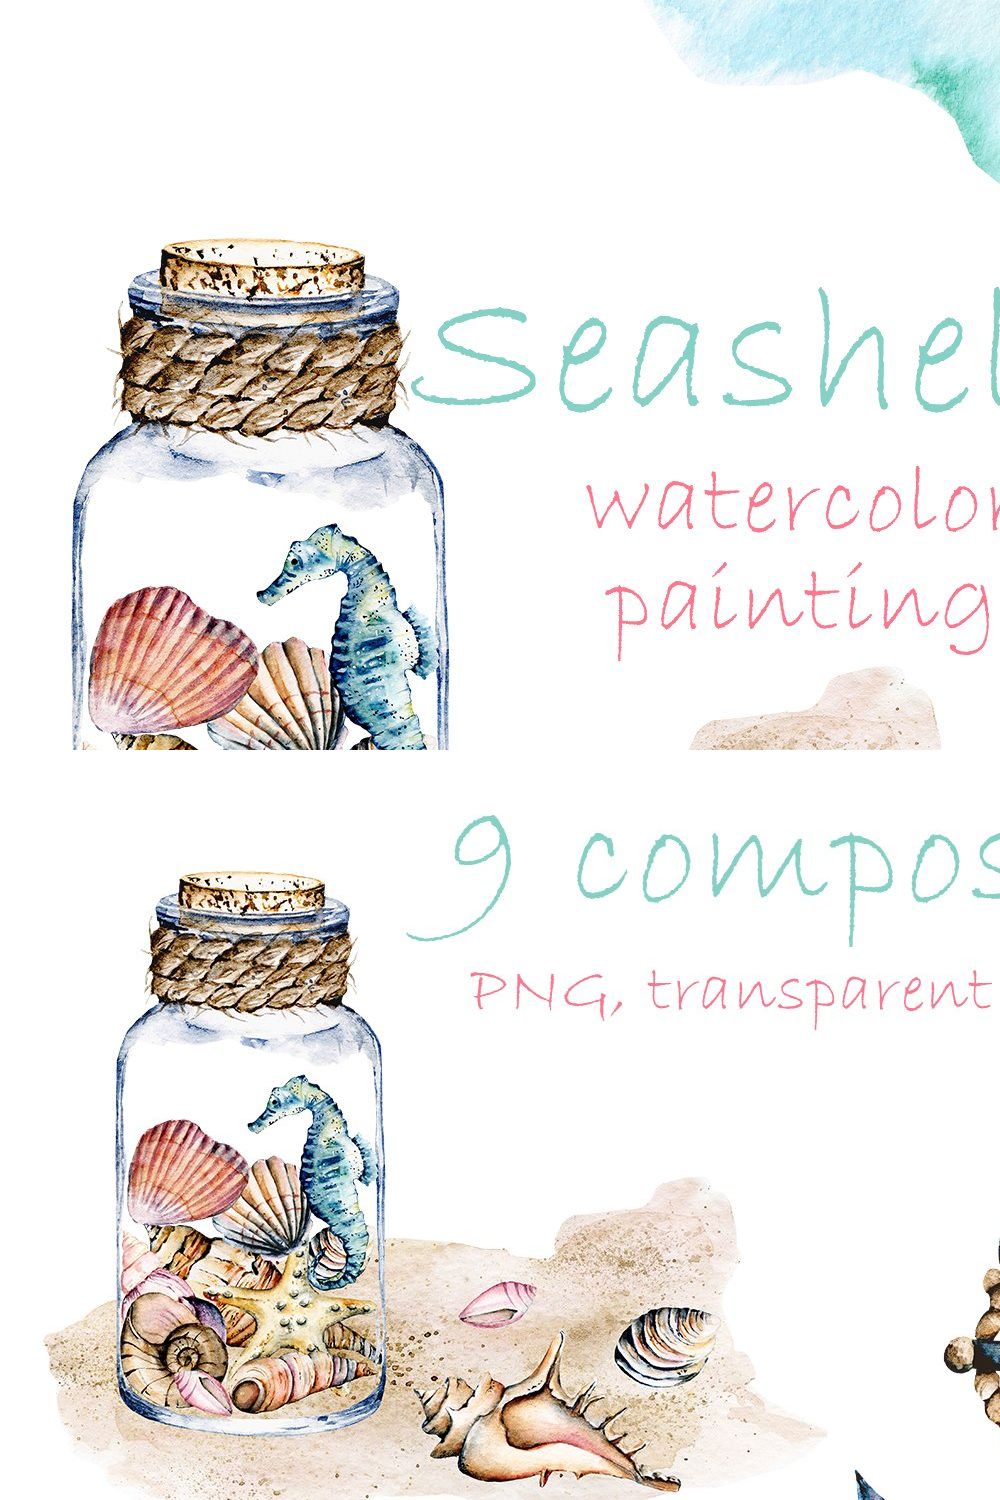 Sea, beach, seashells watercolor. pinterest preview image.